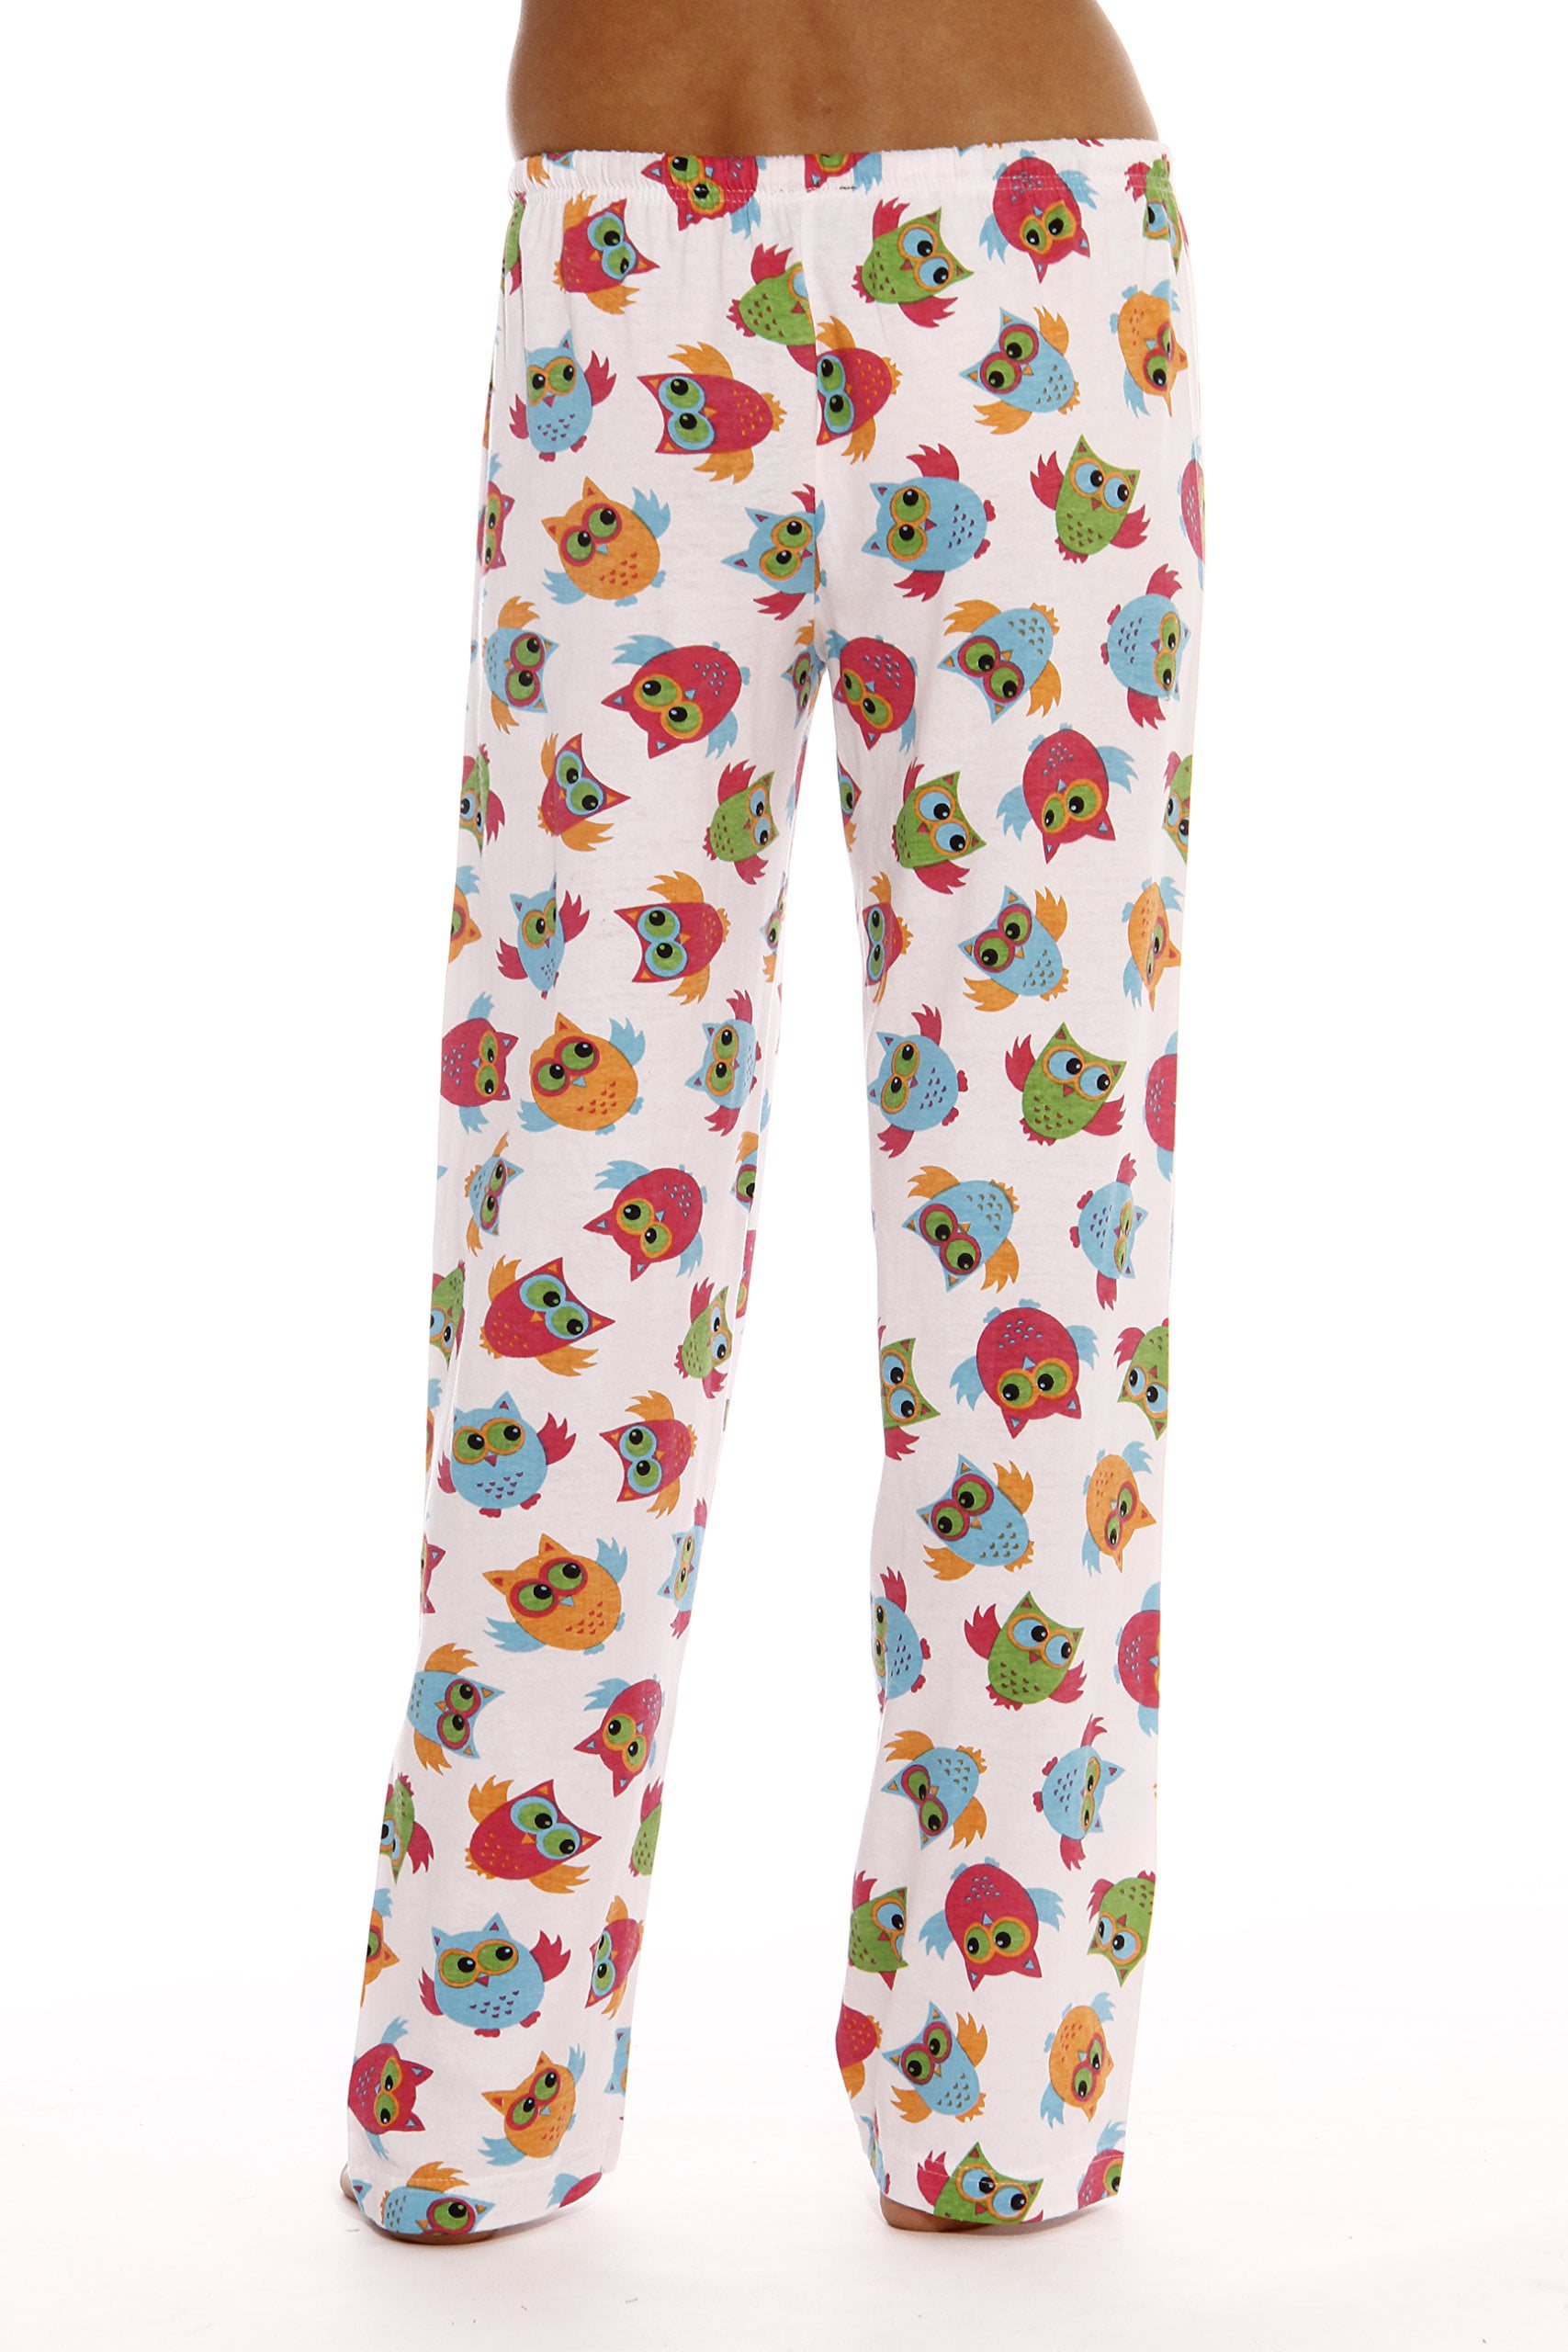 Just Love 100% Cotton Women's Capri Pajama Pants Sleepwear - Comfortable  and Stylish (White - Tropical Flamingos, Medium) 